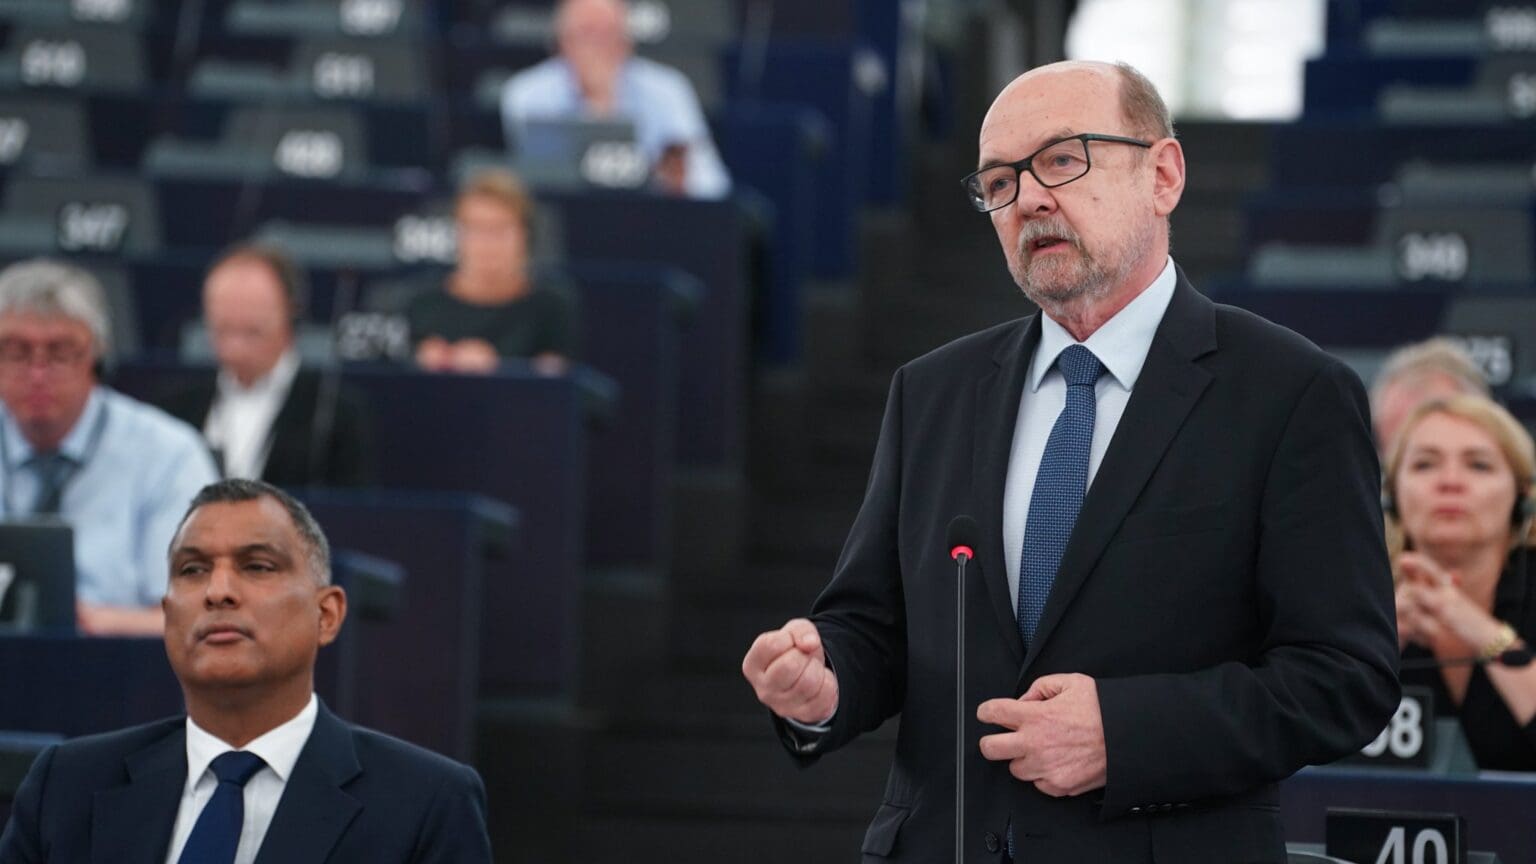 ECR Chairman: The European Parliament Has Alienated Millions of Voters